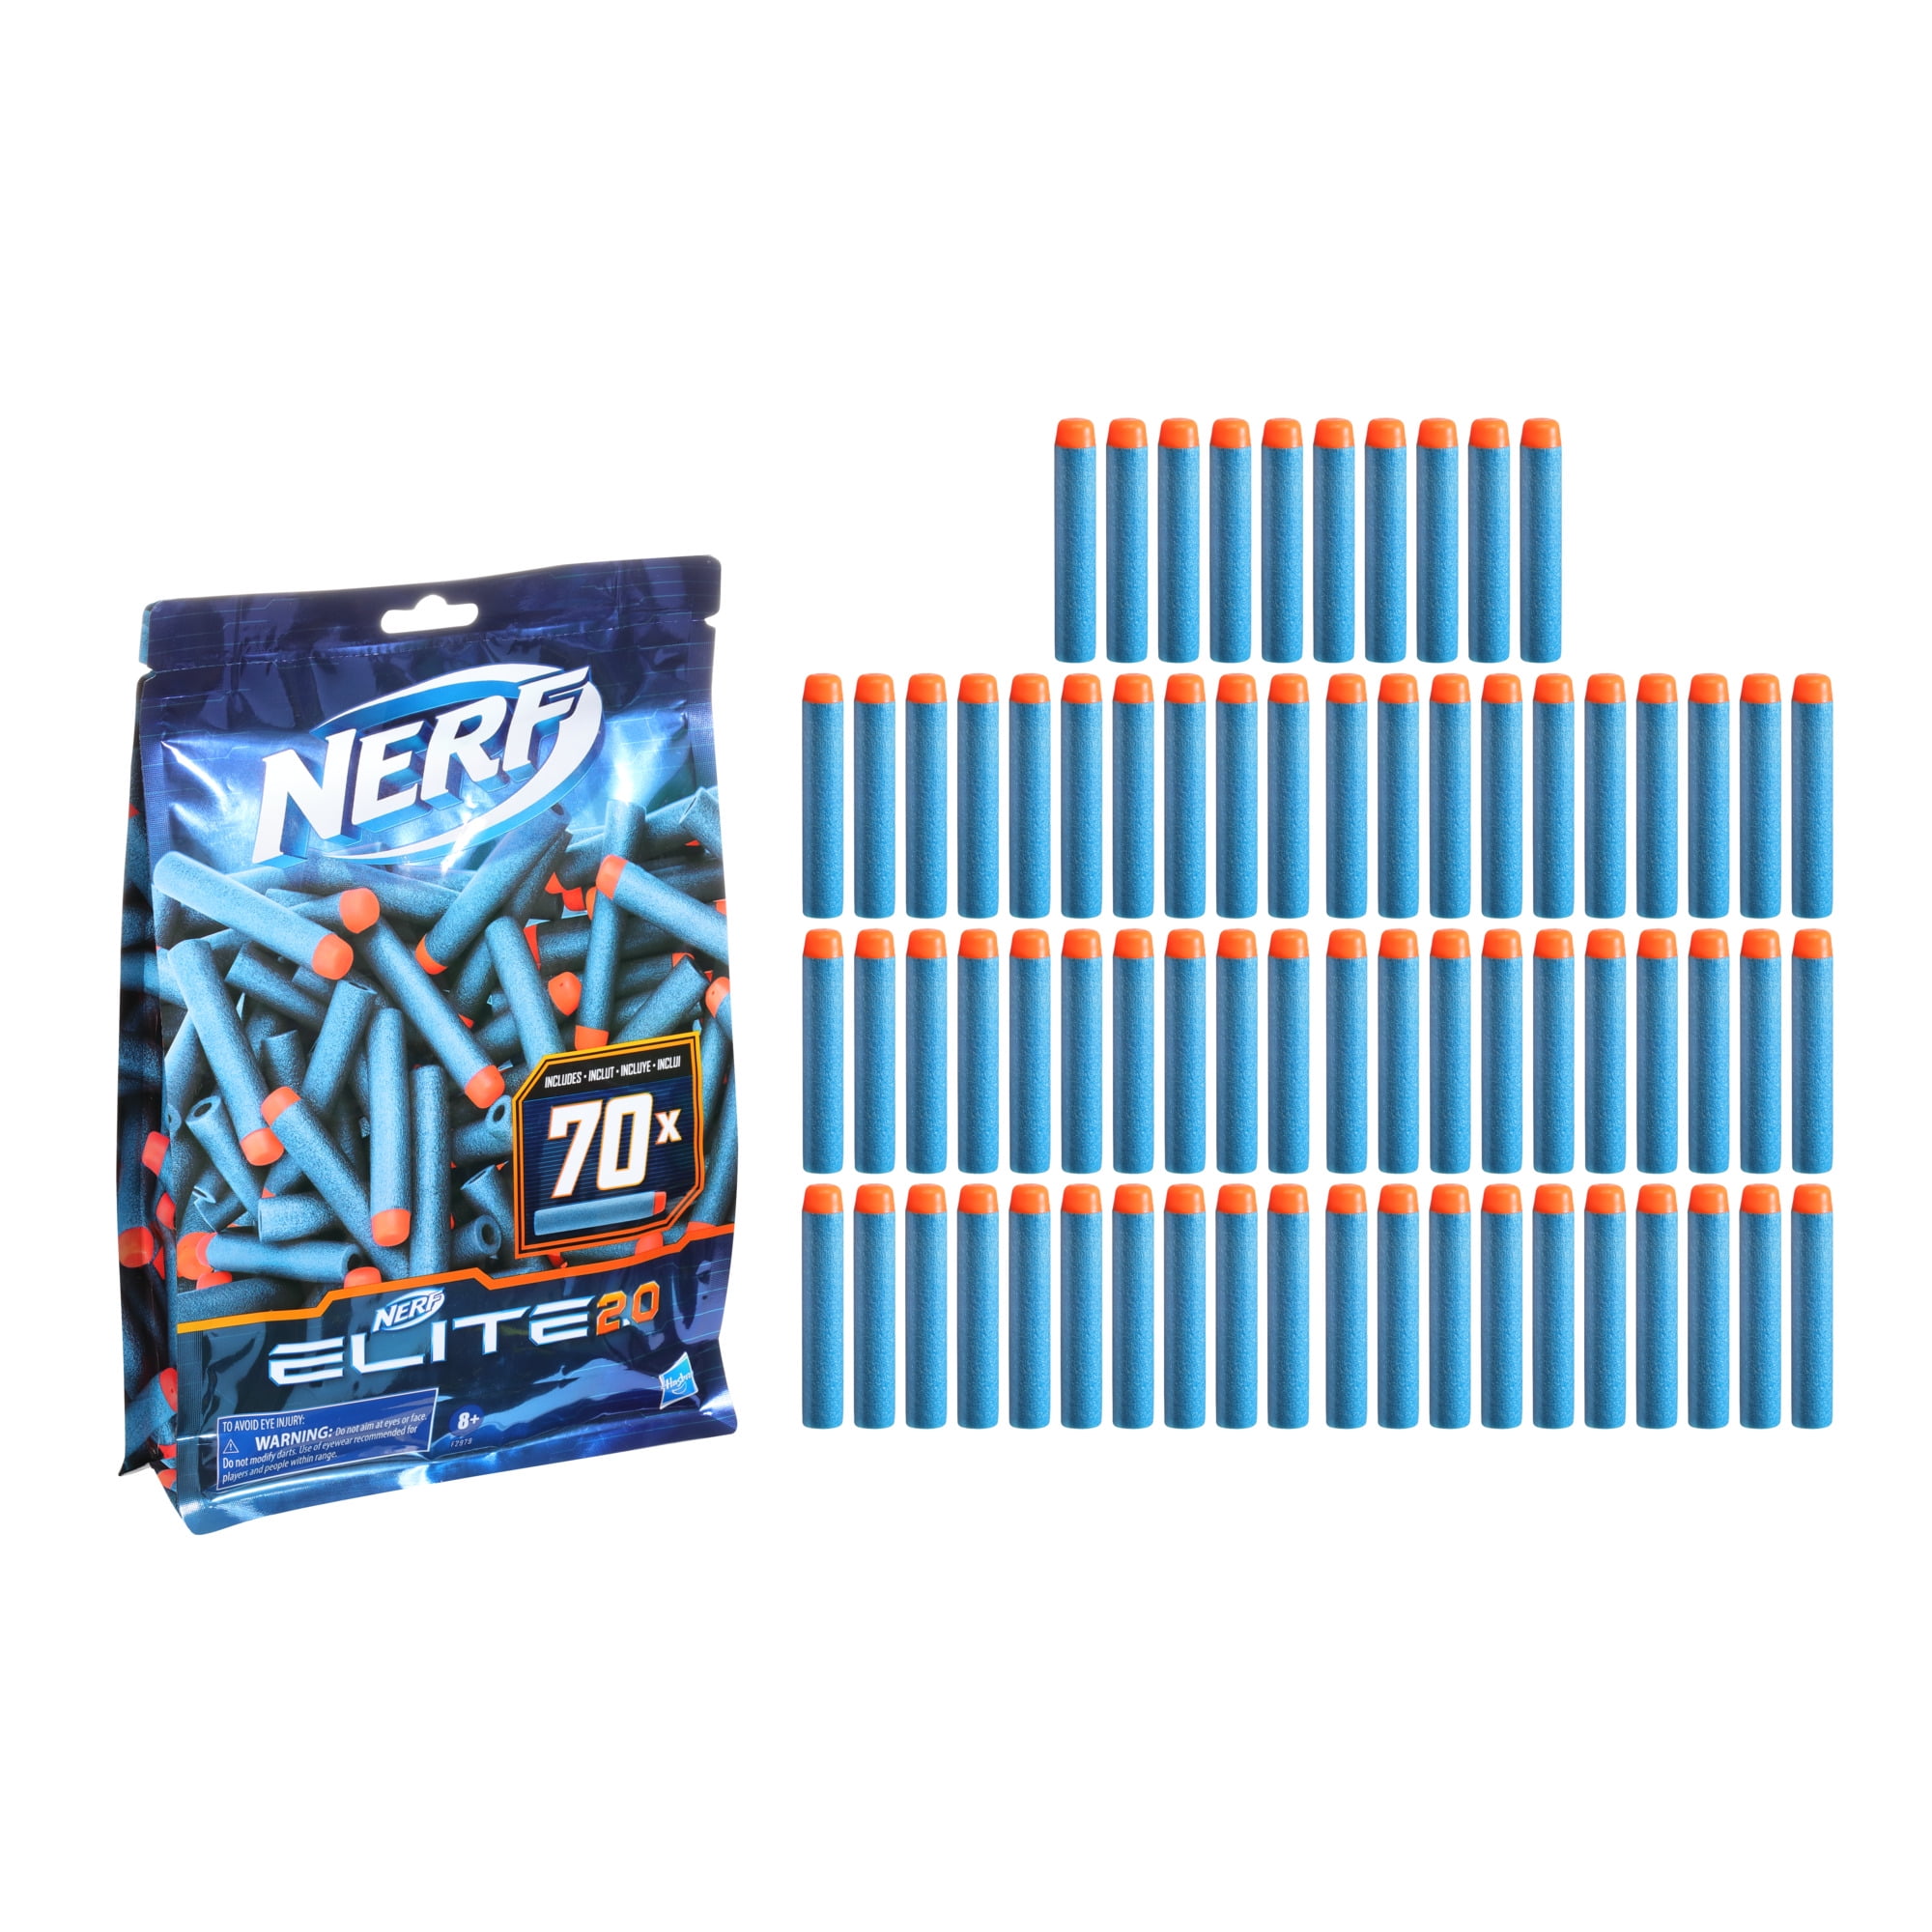 Nerf Elite 2.0 70-Dart Refill Pack, Includes 70 Official Nerf Elite 2.0 Darts for Blasters